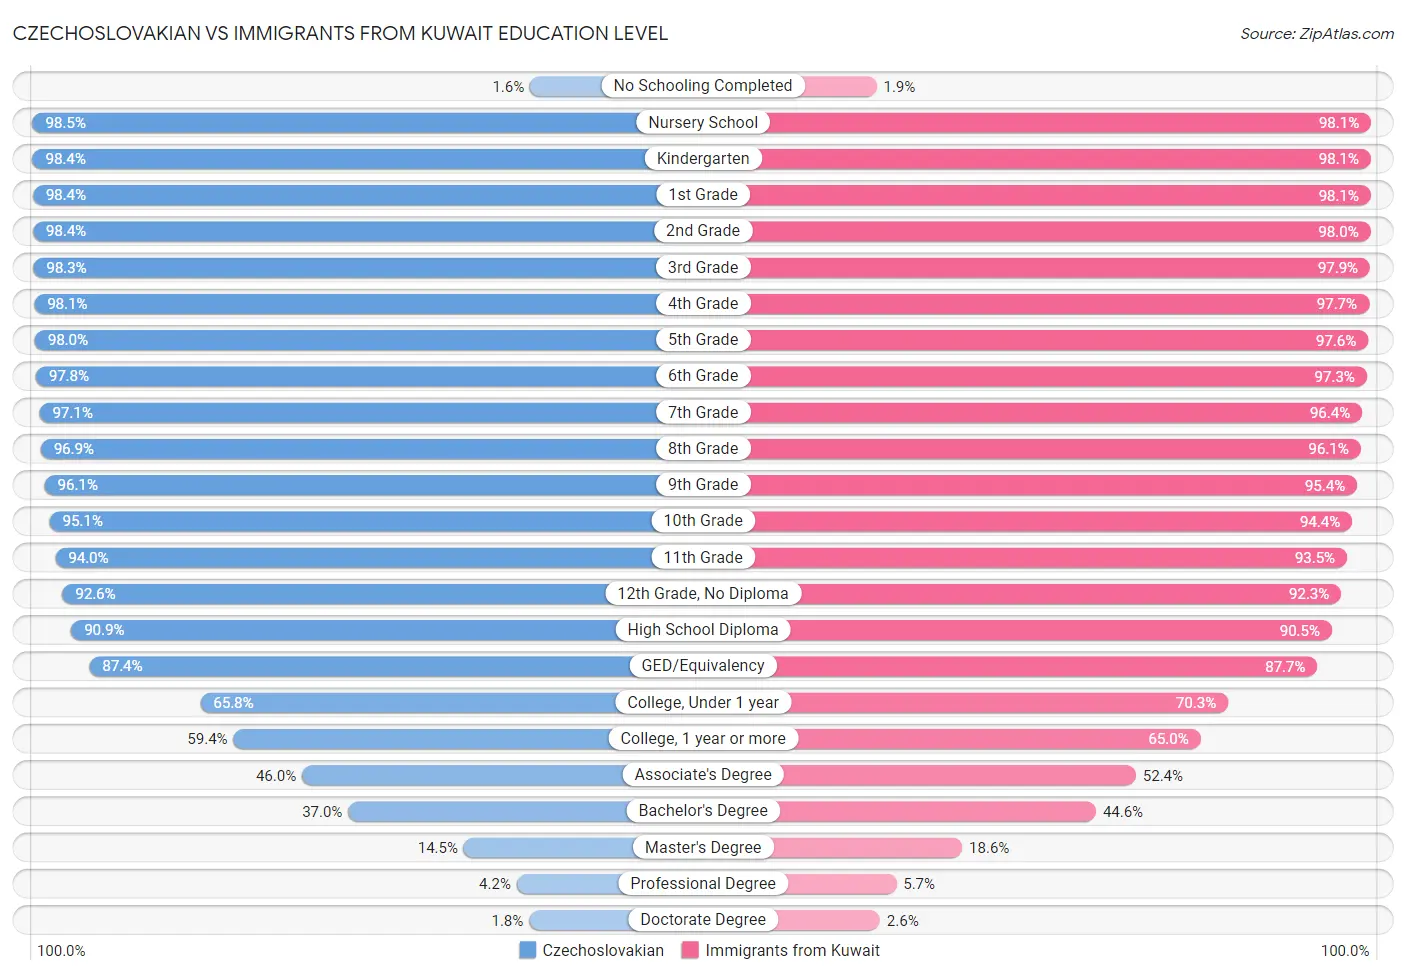 Czechoslovakian vs Immigrants from Kuwait Education Level